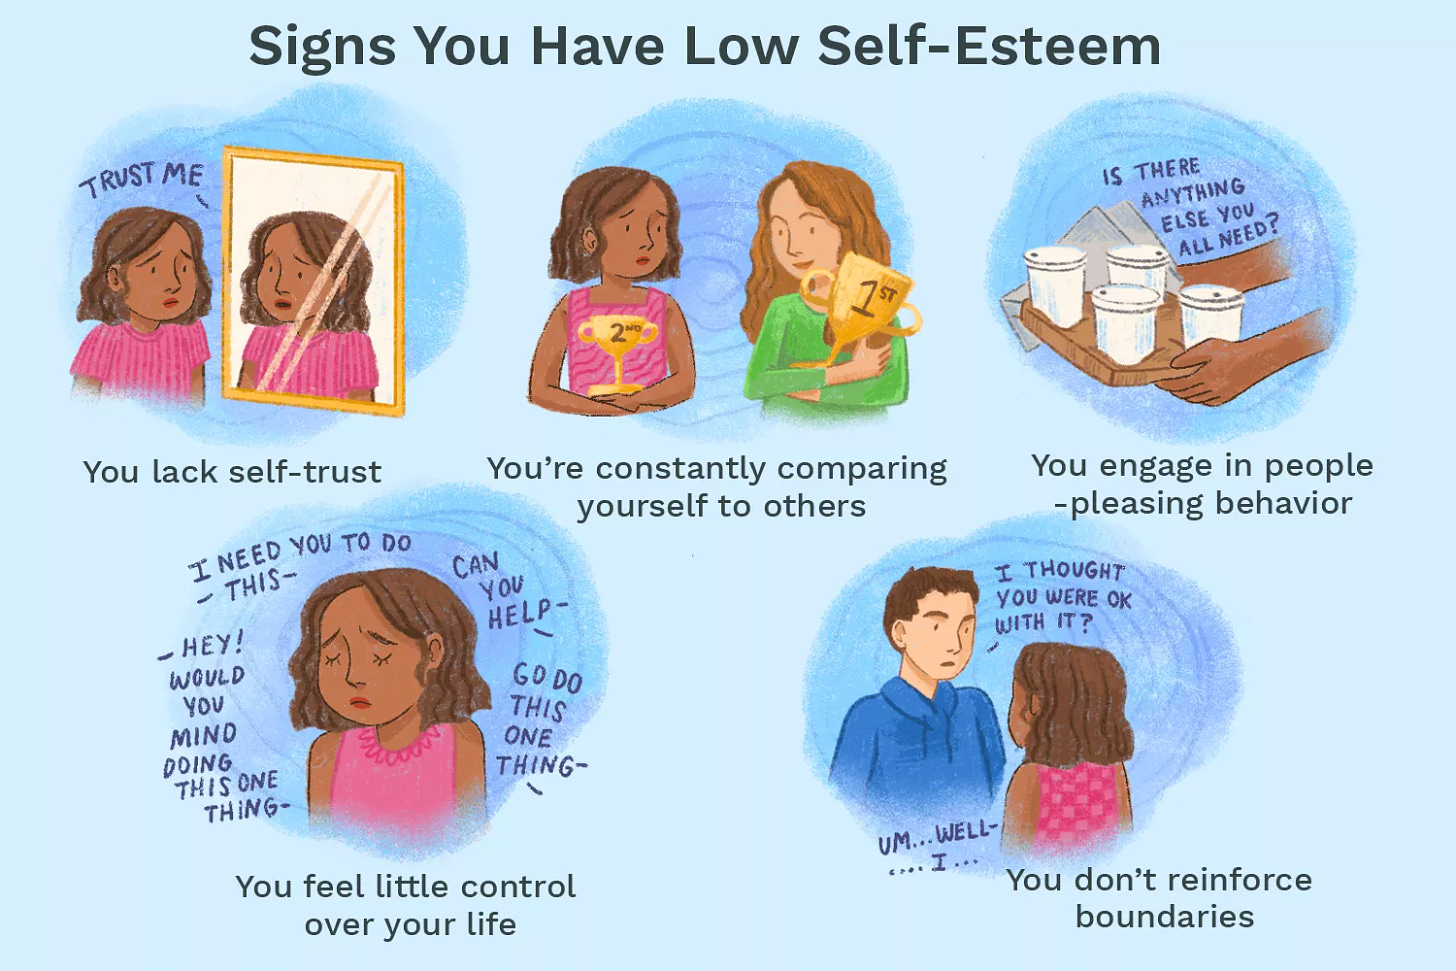 Signs of low self-esteem